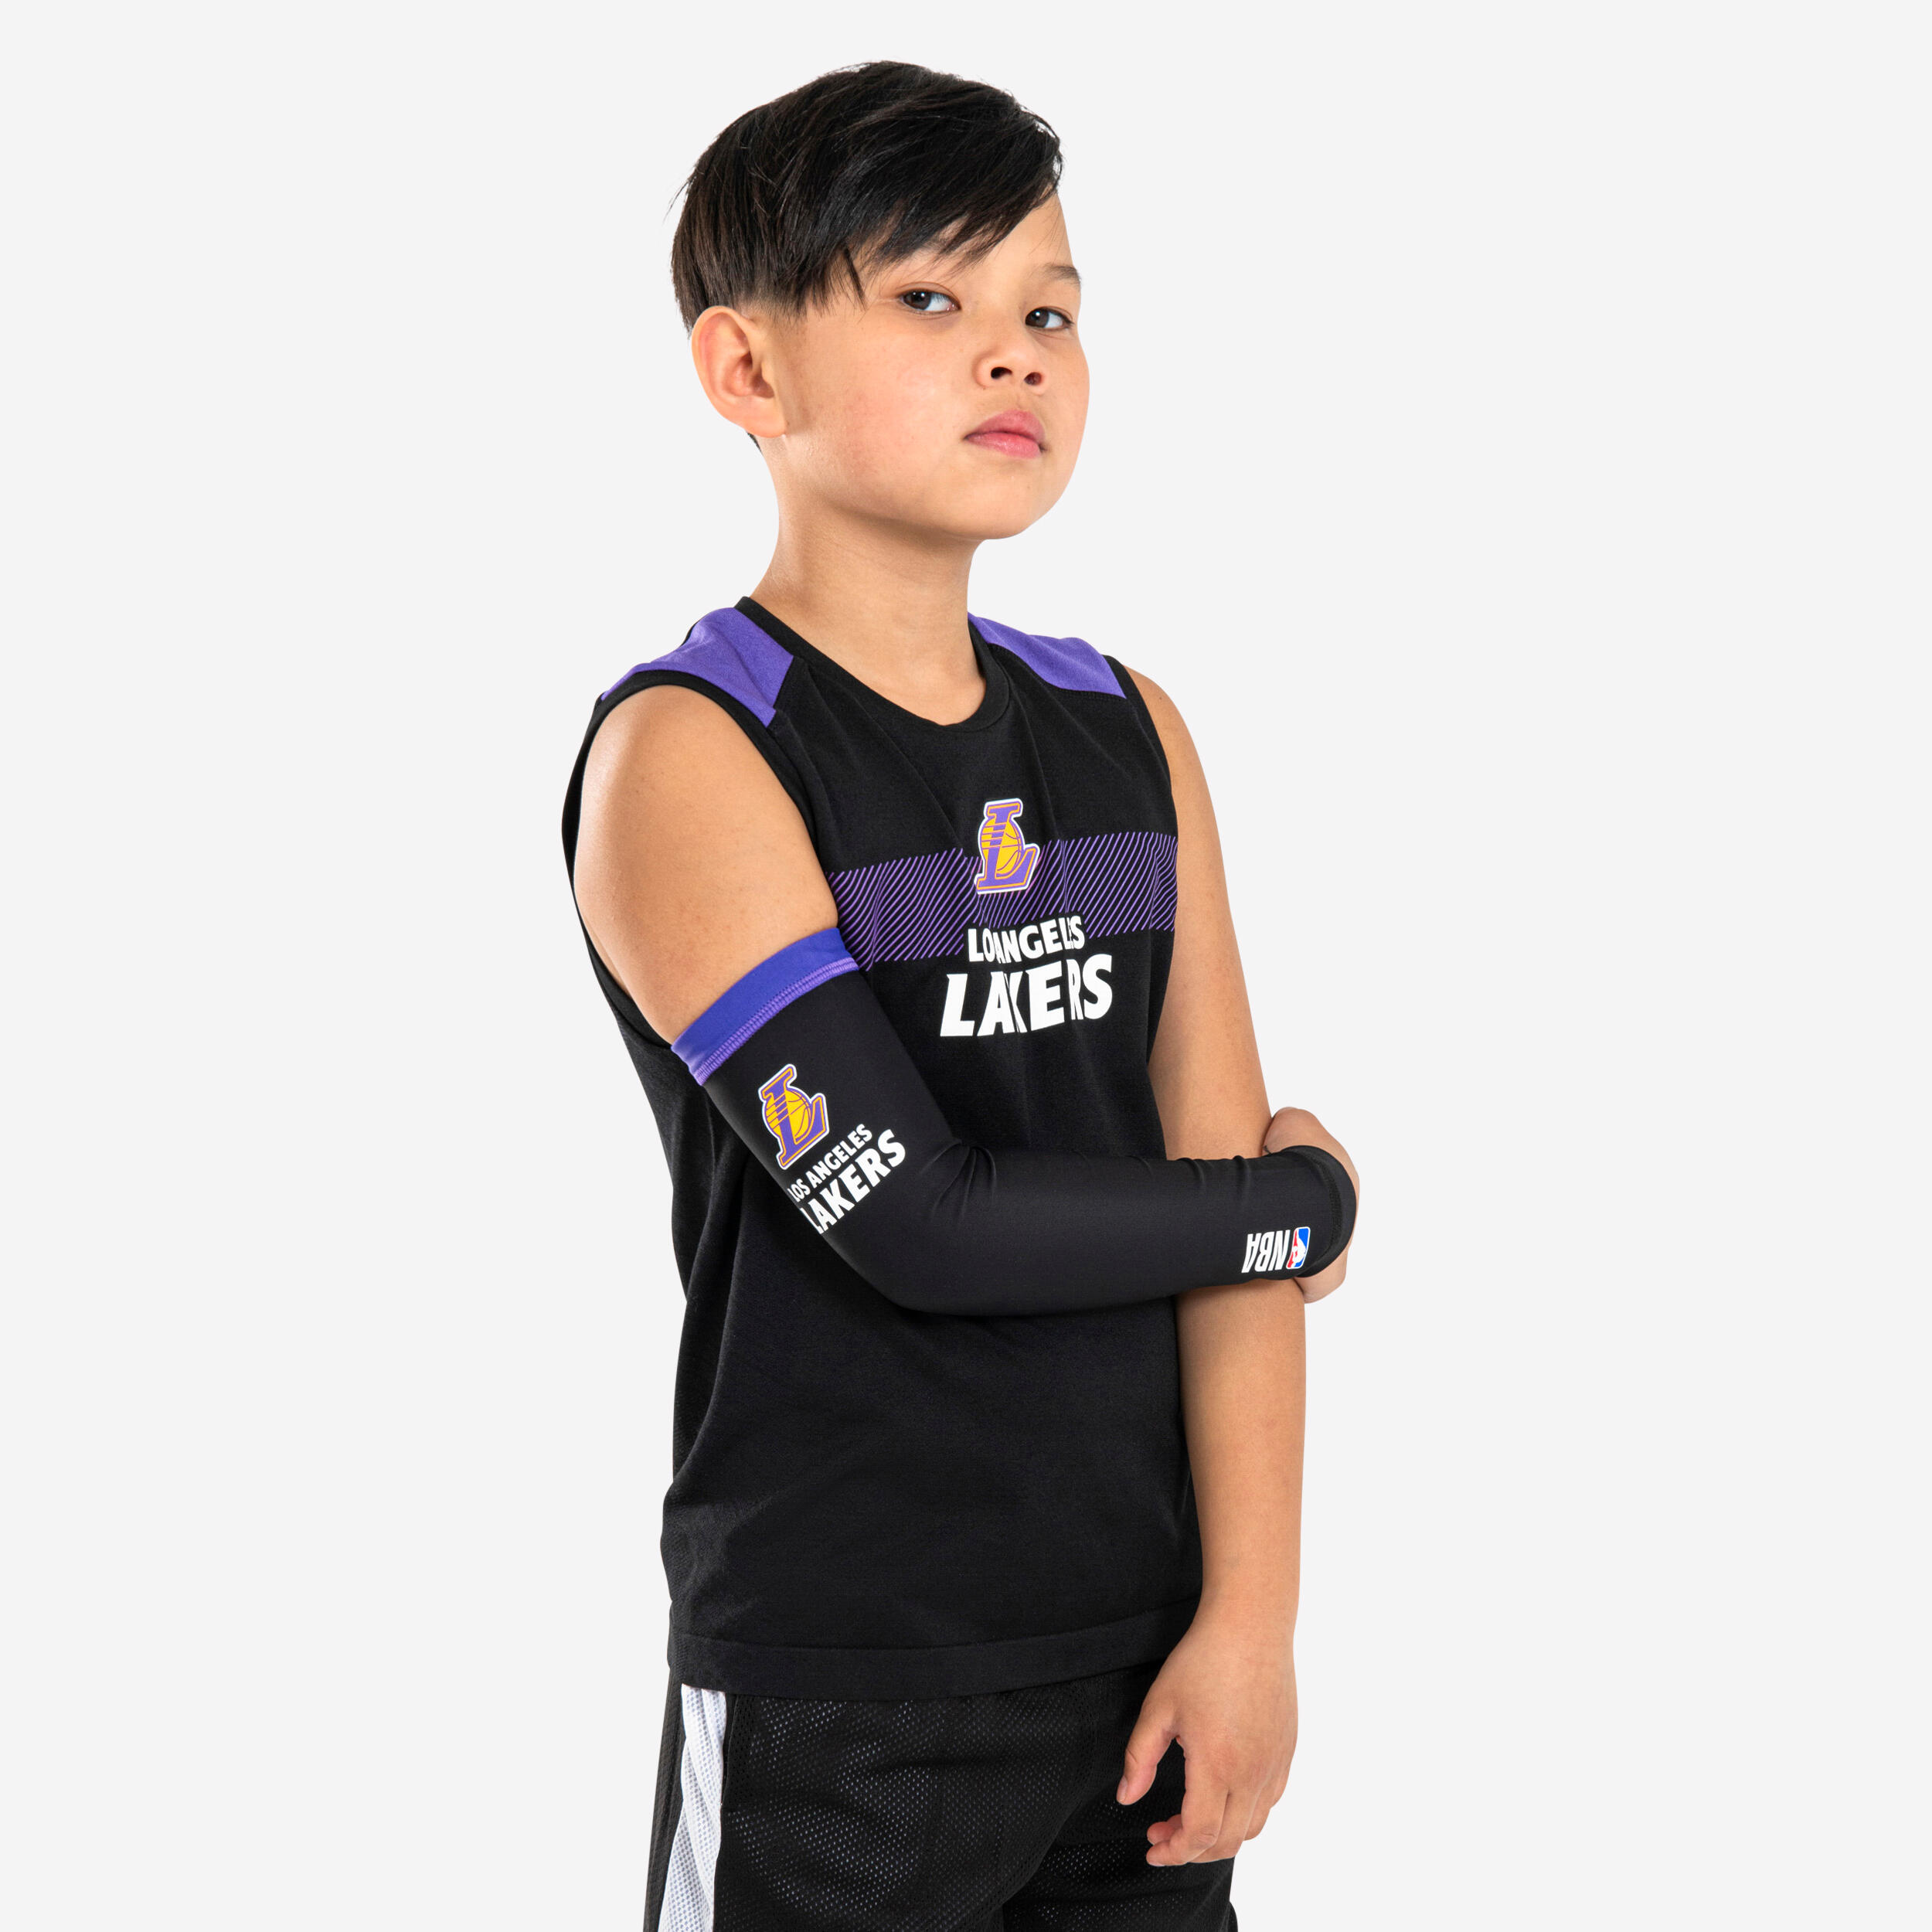 Kids' Sleeveless Basketball Base Layer Jersey UT500 - NBA Los Angeles Lakers/Black 1/8